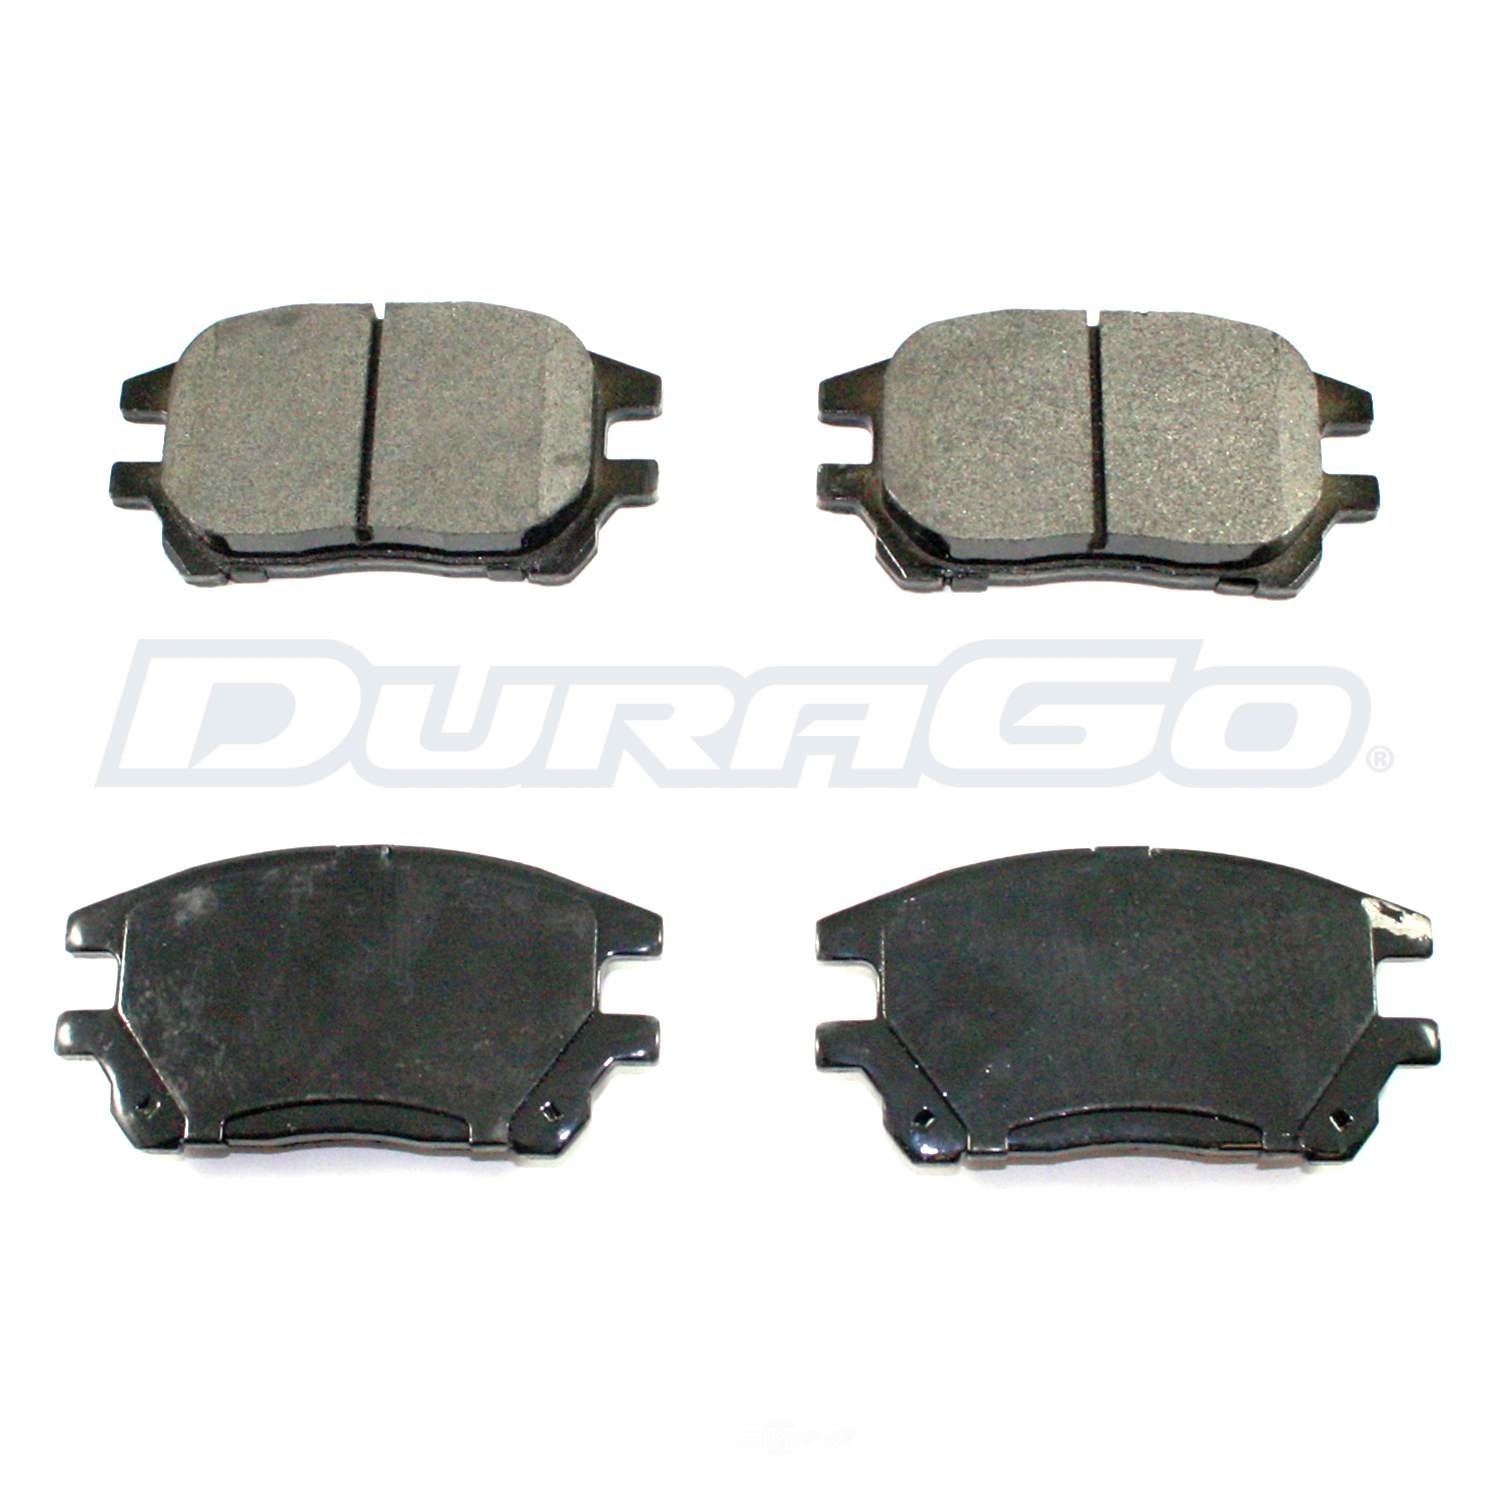 DURAGO - Disc Brake Pad (Front) - D48 BP930C